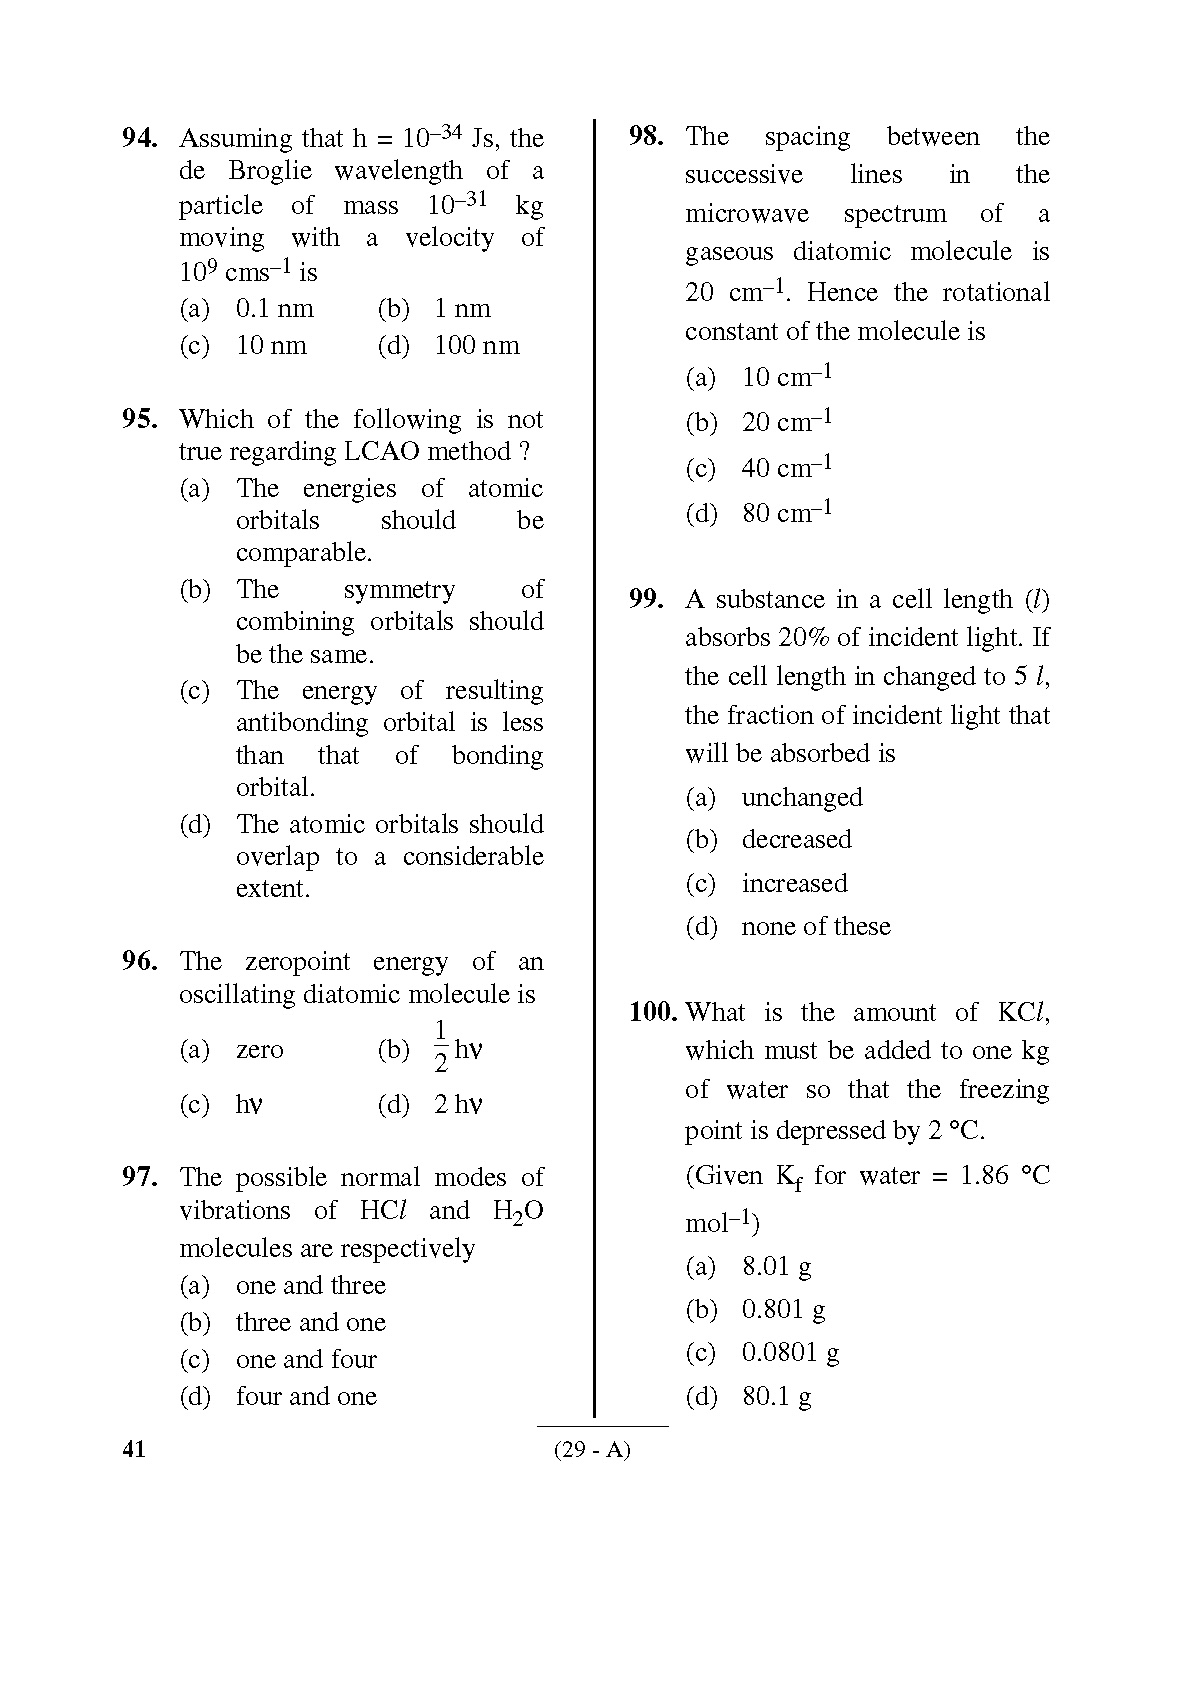 Karnataka PSC Drugs Analyst Chemistry Exam Sample Question Paper 29